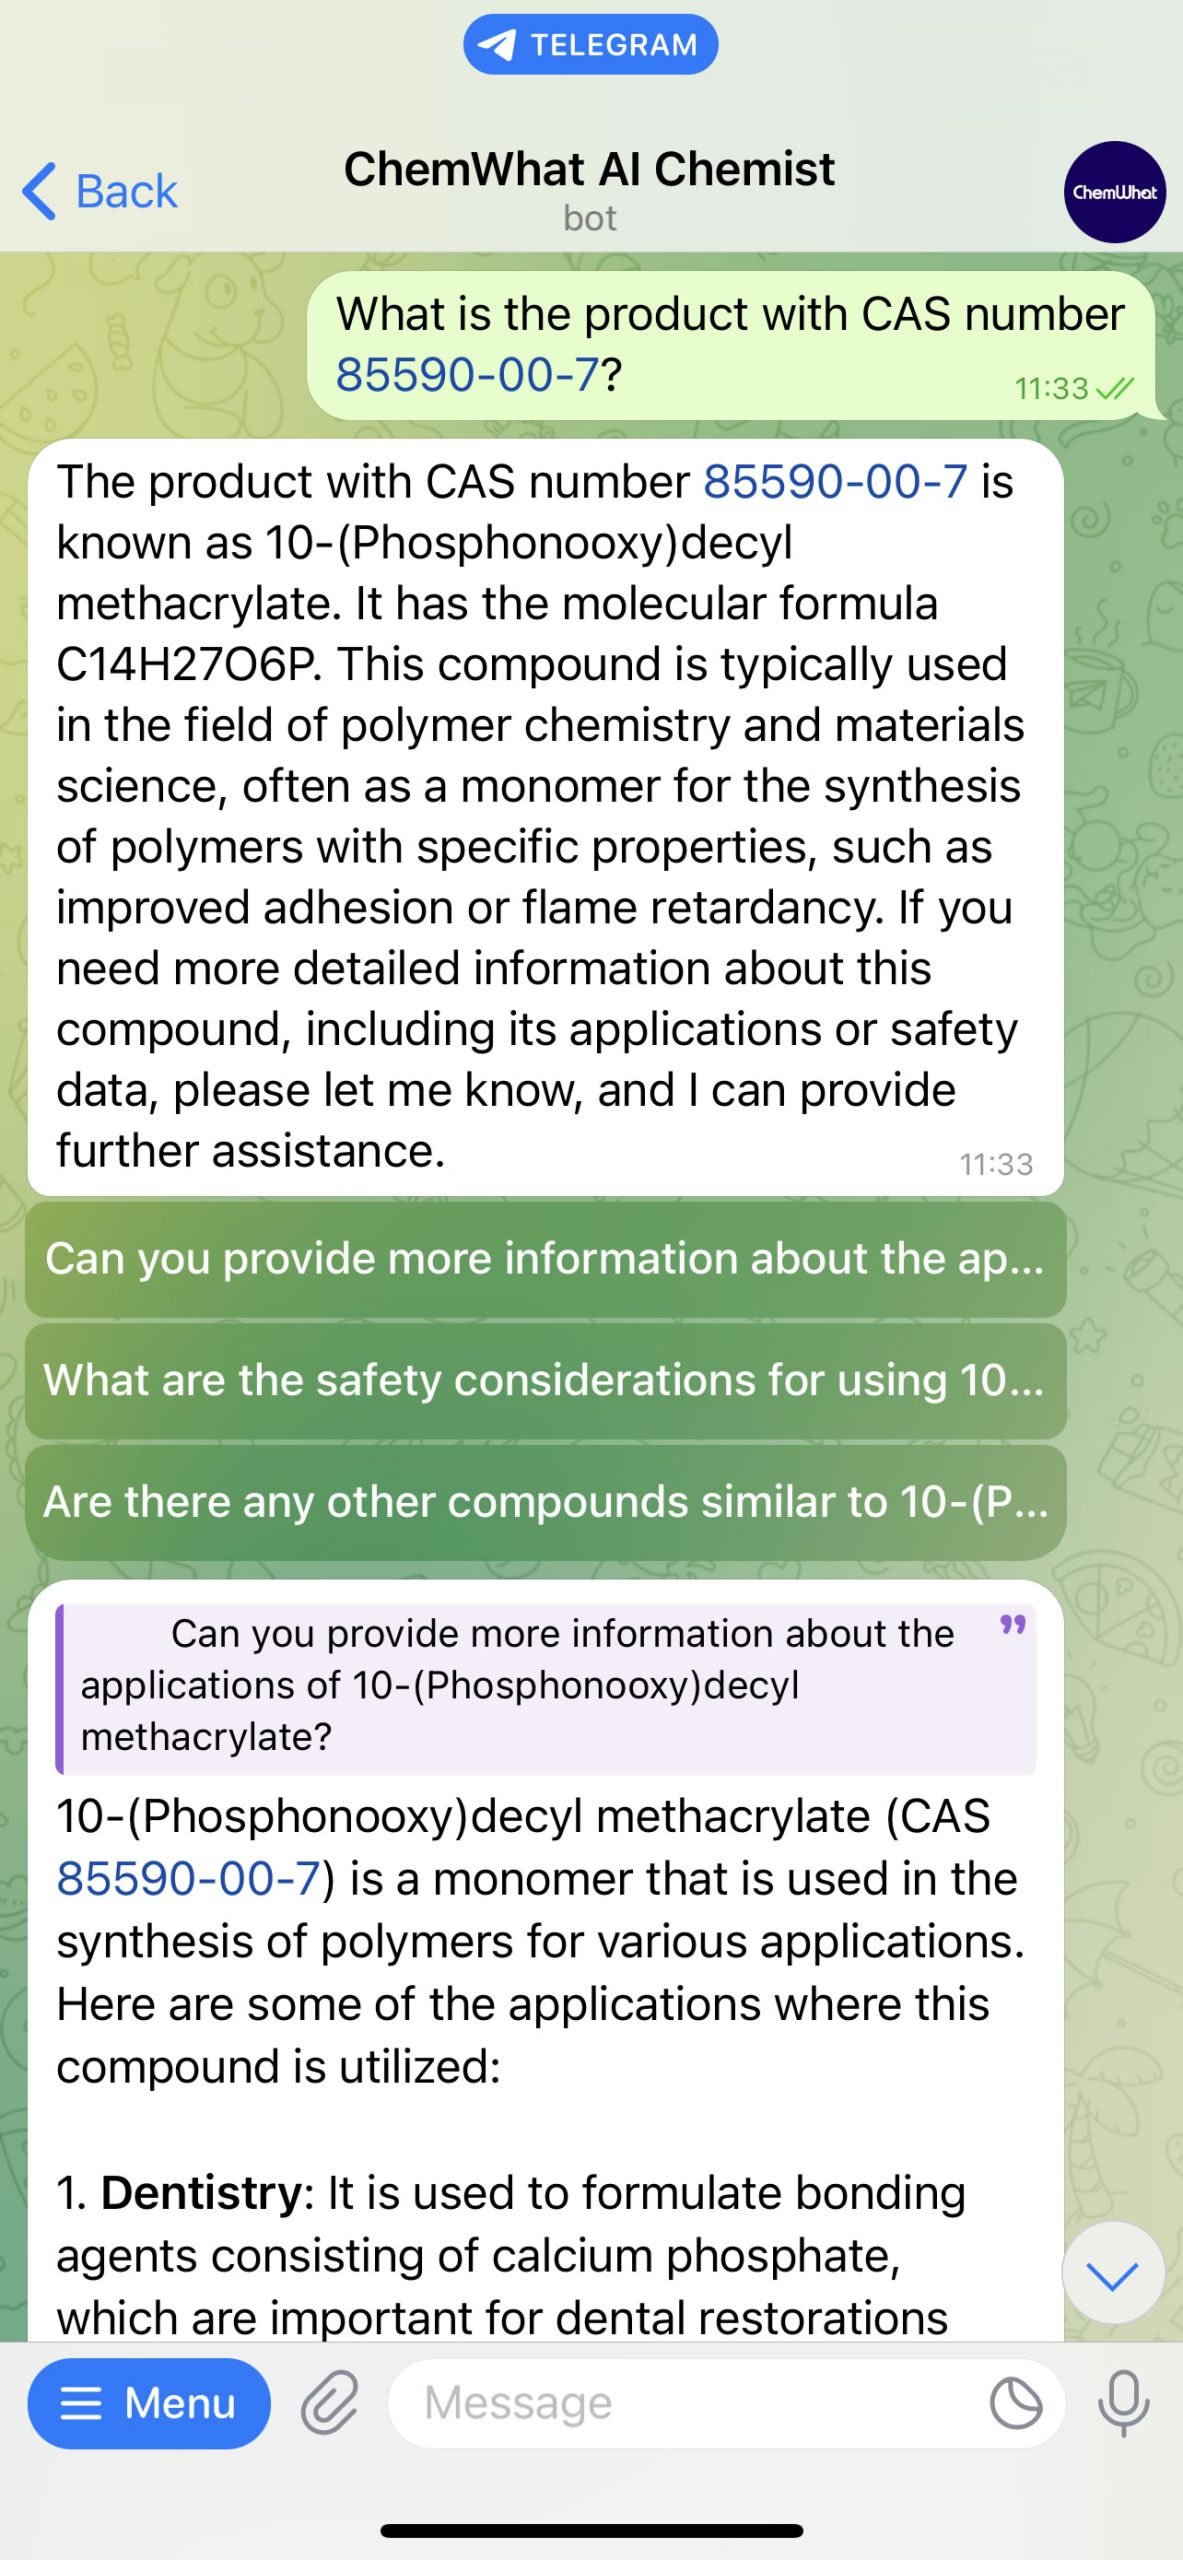 ChemWhat AI Chemist use - AI Chemist, powered by ChemWhat, now on Telegram